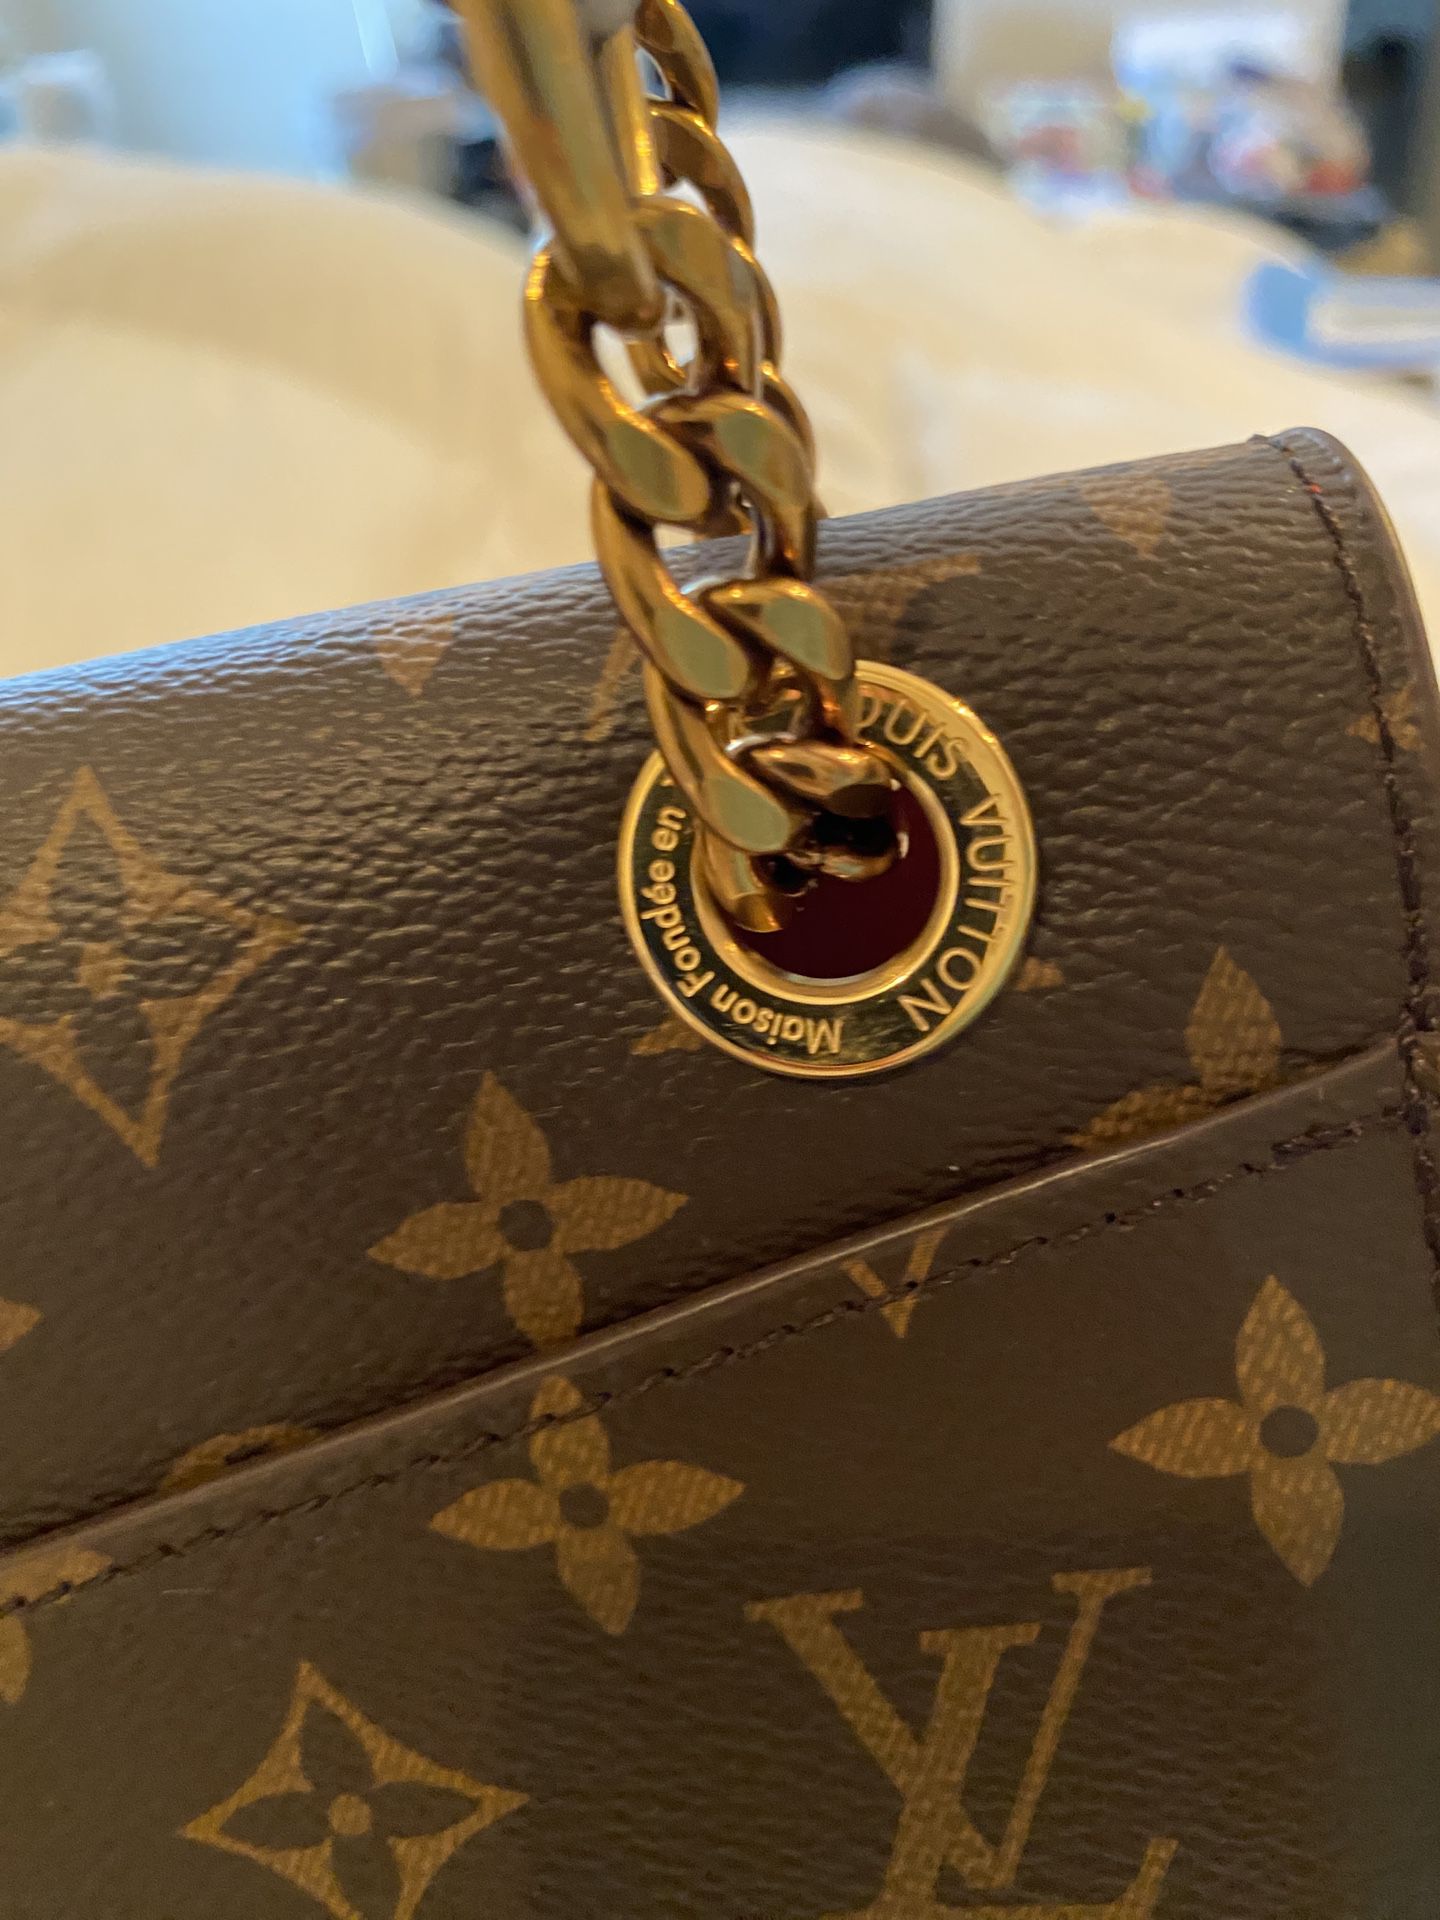 Louis Vuitton Inventpdr Malletra Paris Women Hand Bag for Sale in  Woodbridge, VA - OfferUp